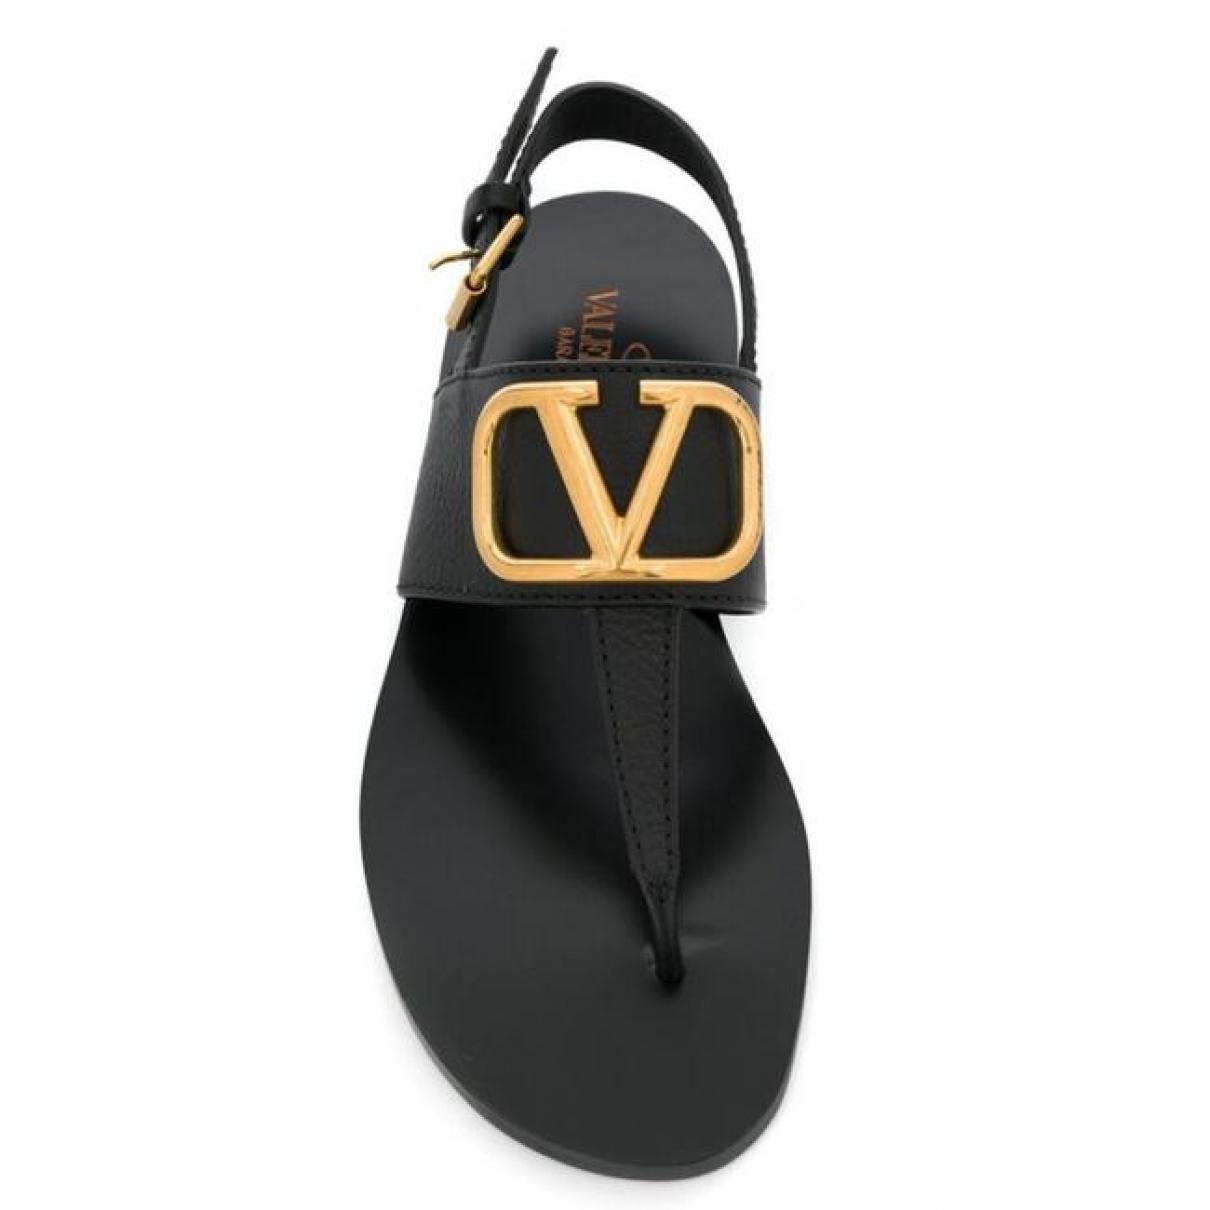 VLogo leather sandal - 4